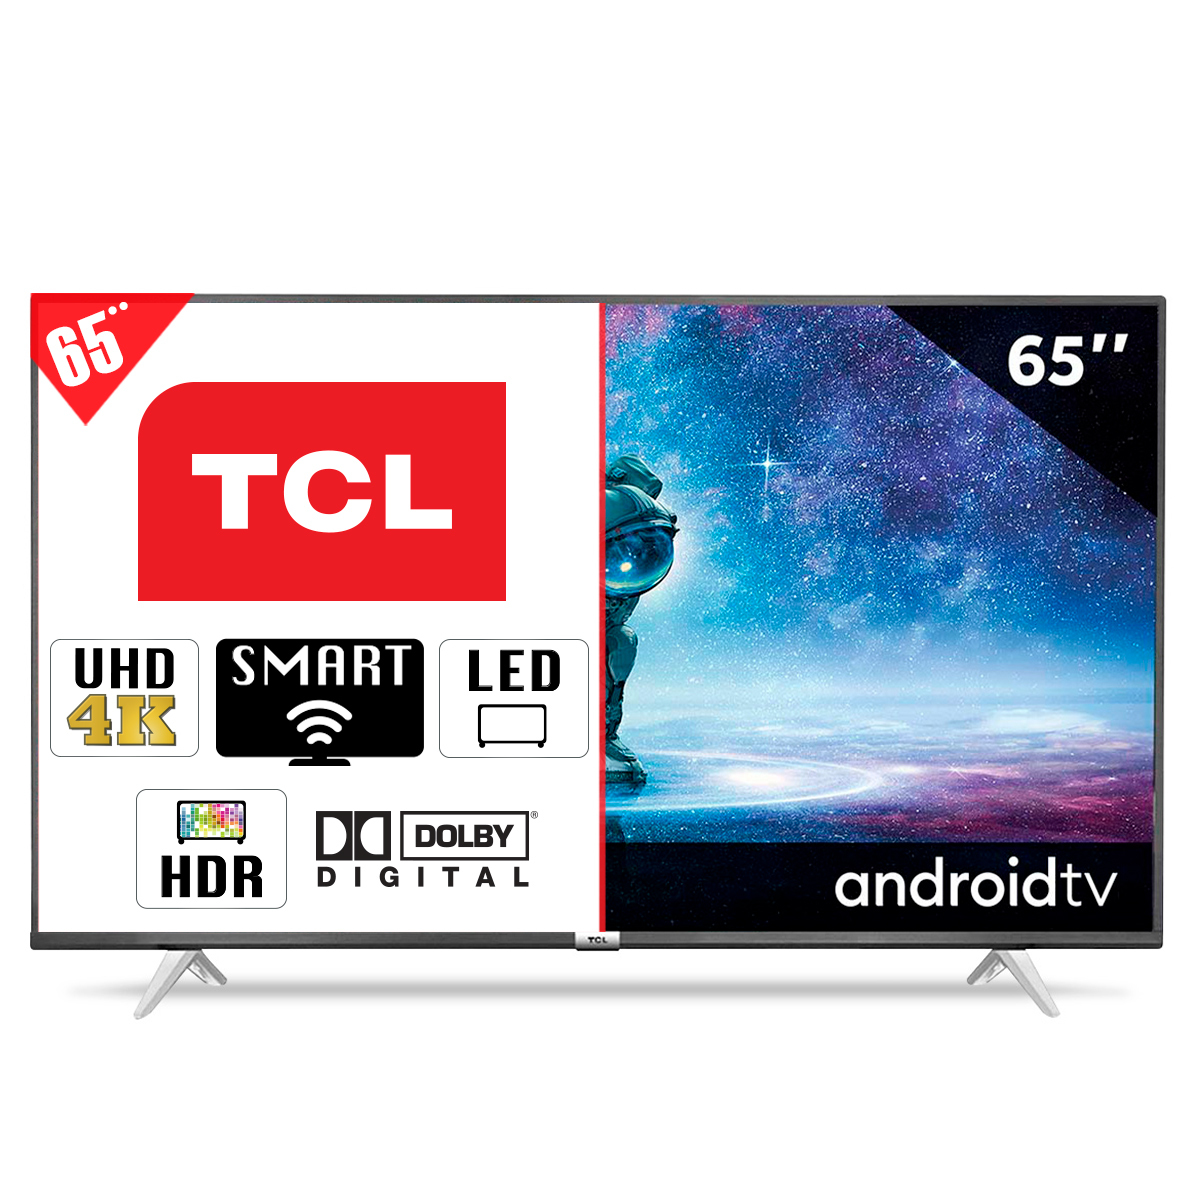 Pantalla TV TCL 65A445 / 4K Ultra HD / 65 Pulg. / Smart TV / Led / Bluetooth / Dolby Digital / HDMI / USB